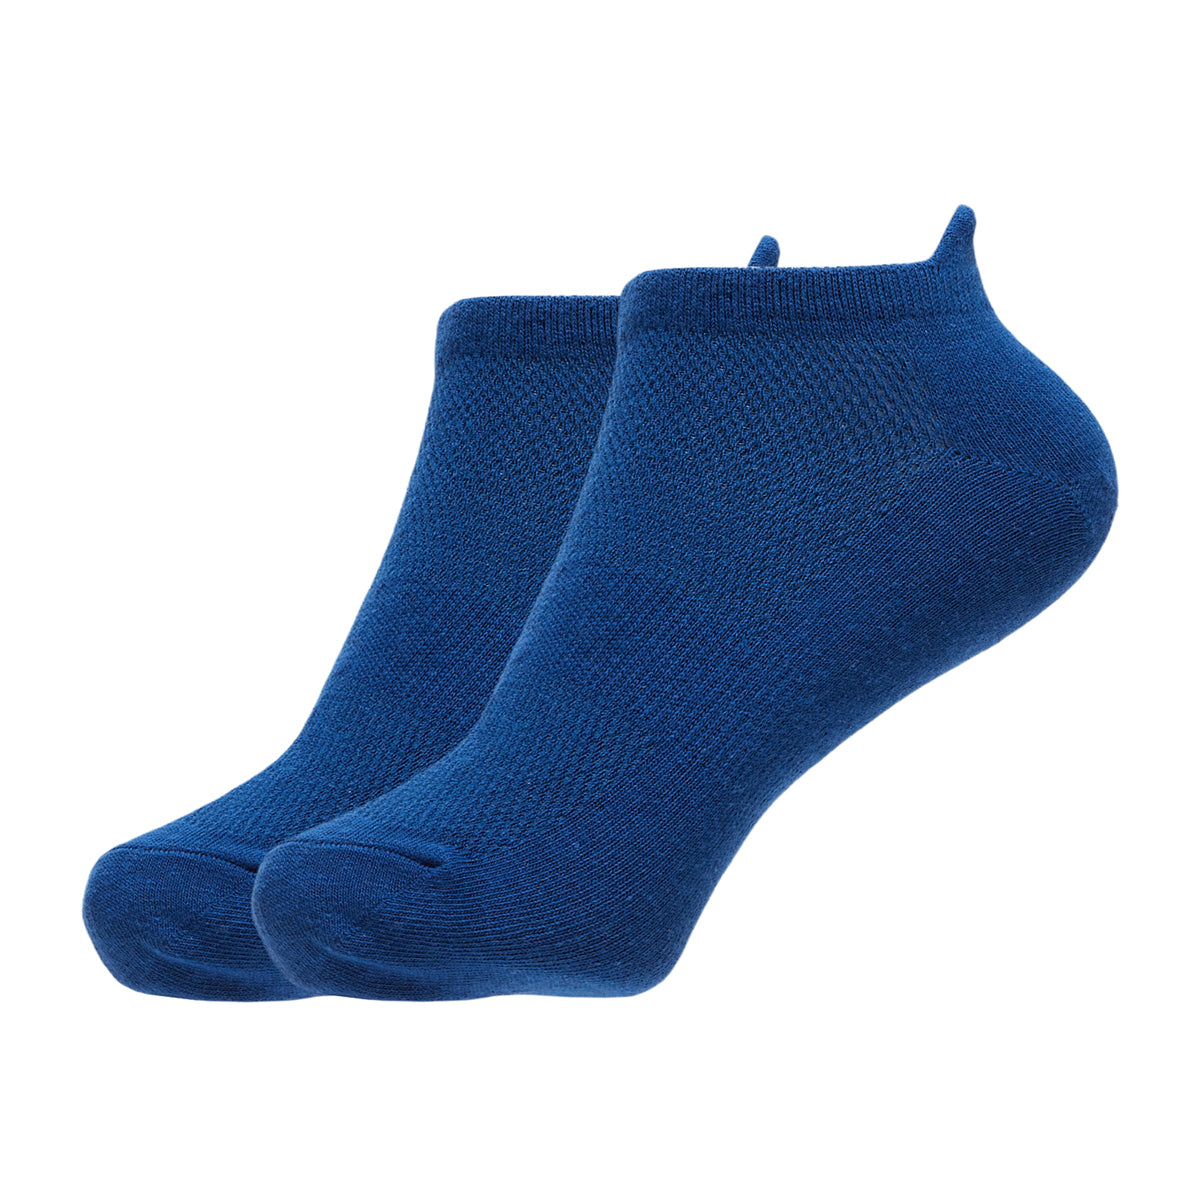 Plain Ankle Length Cotton Socks with Heel tab - IDENTITY Apparel Shop